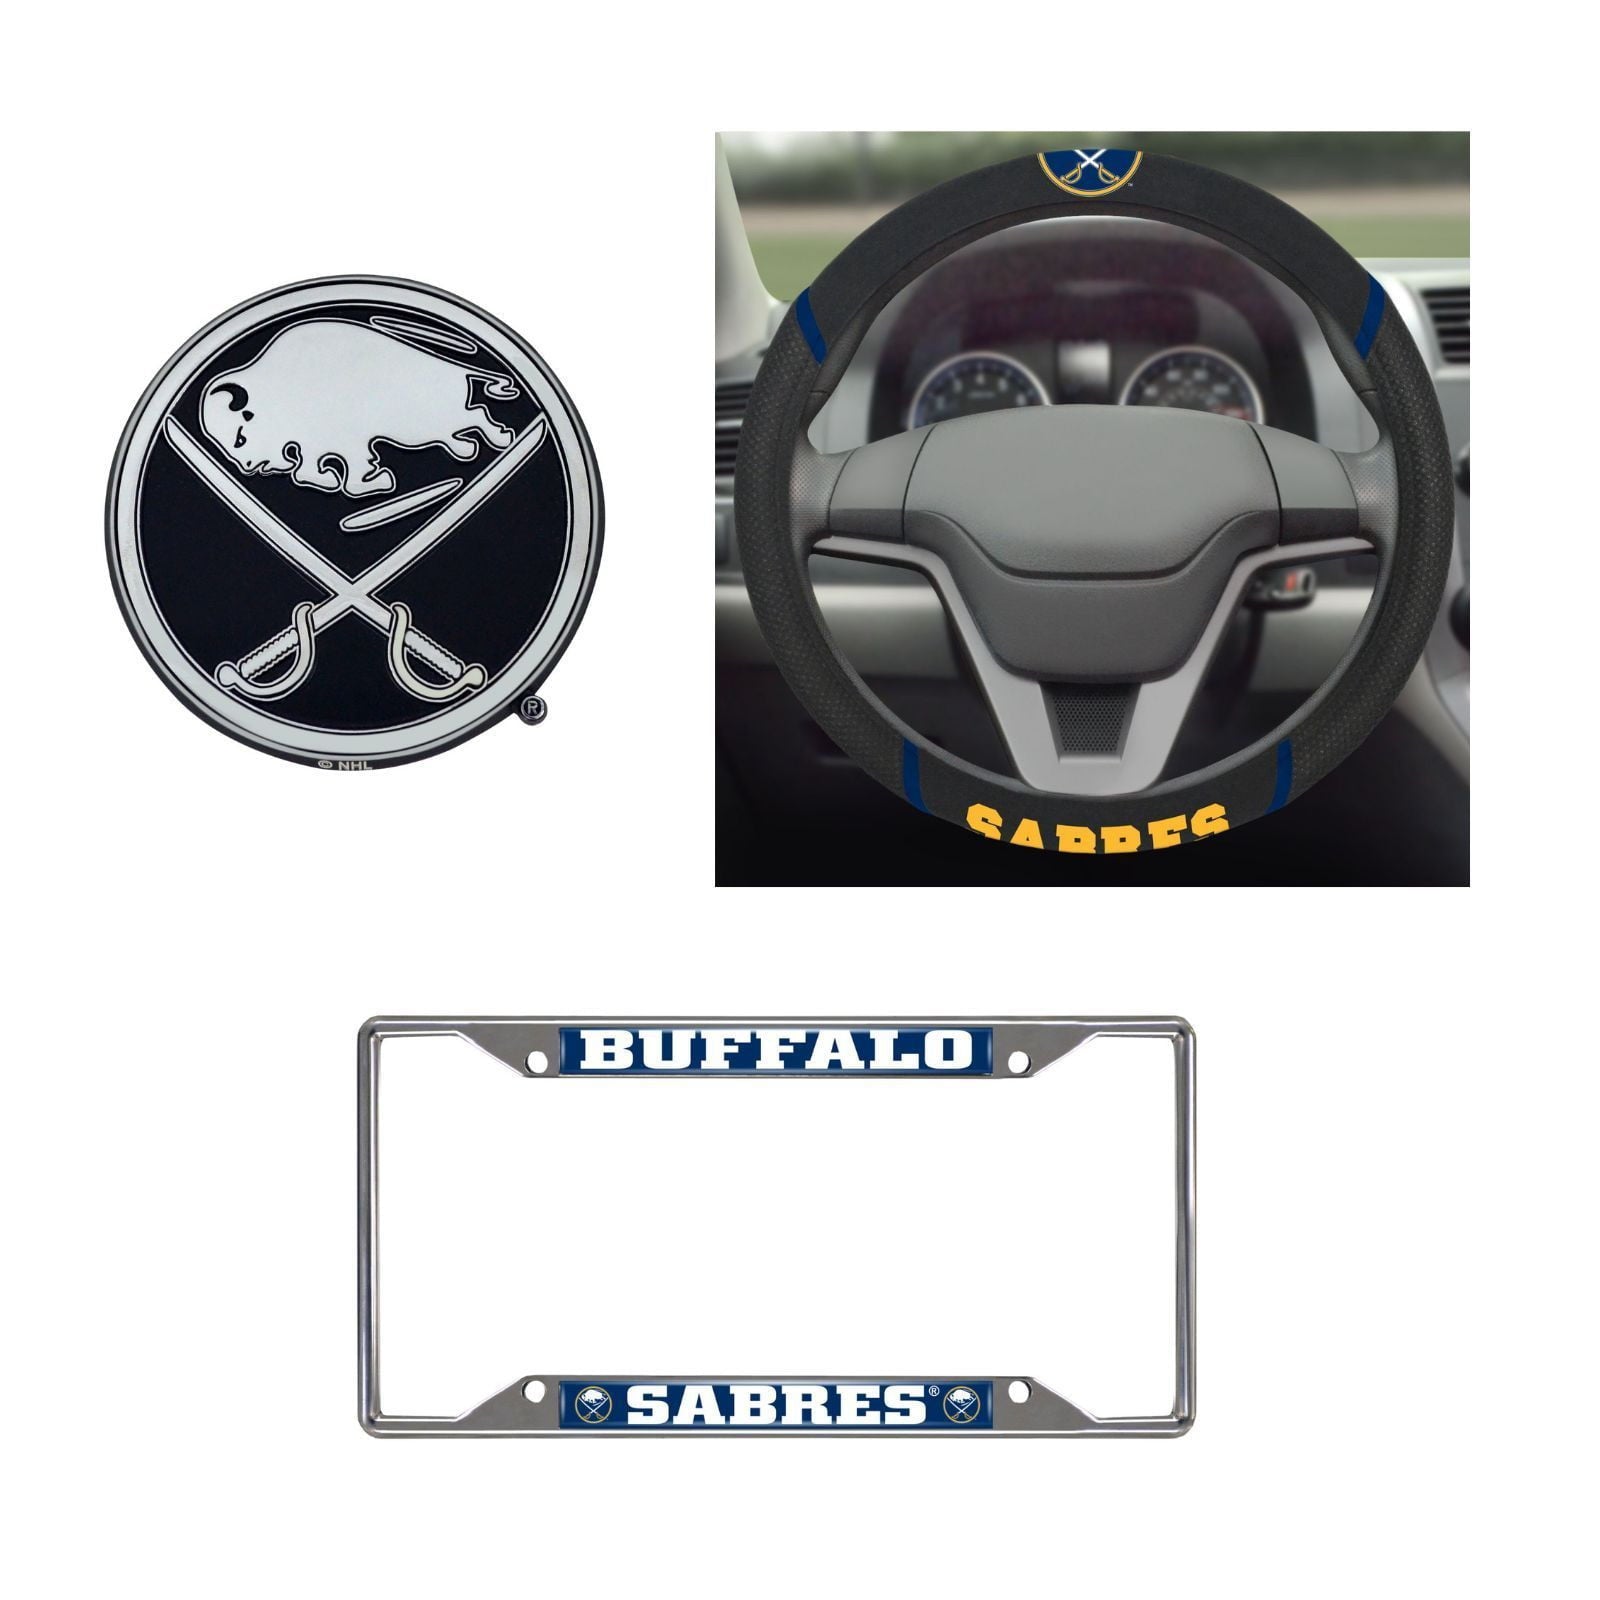 Buffalo Sabres Steering Wheel Cover, License Plate Frame, 3D Chrome Emblem